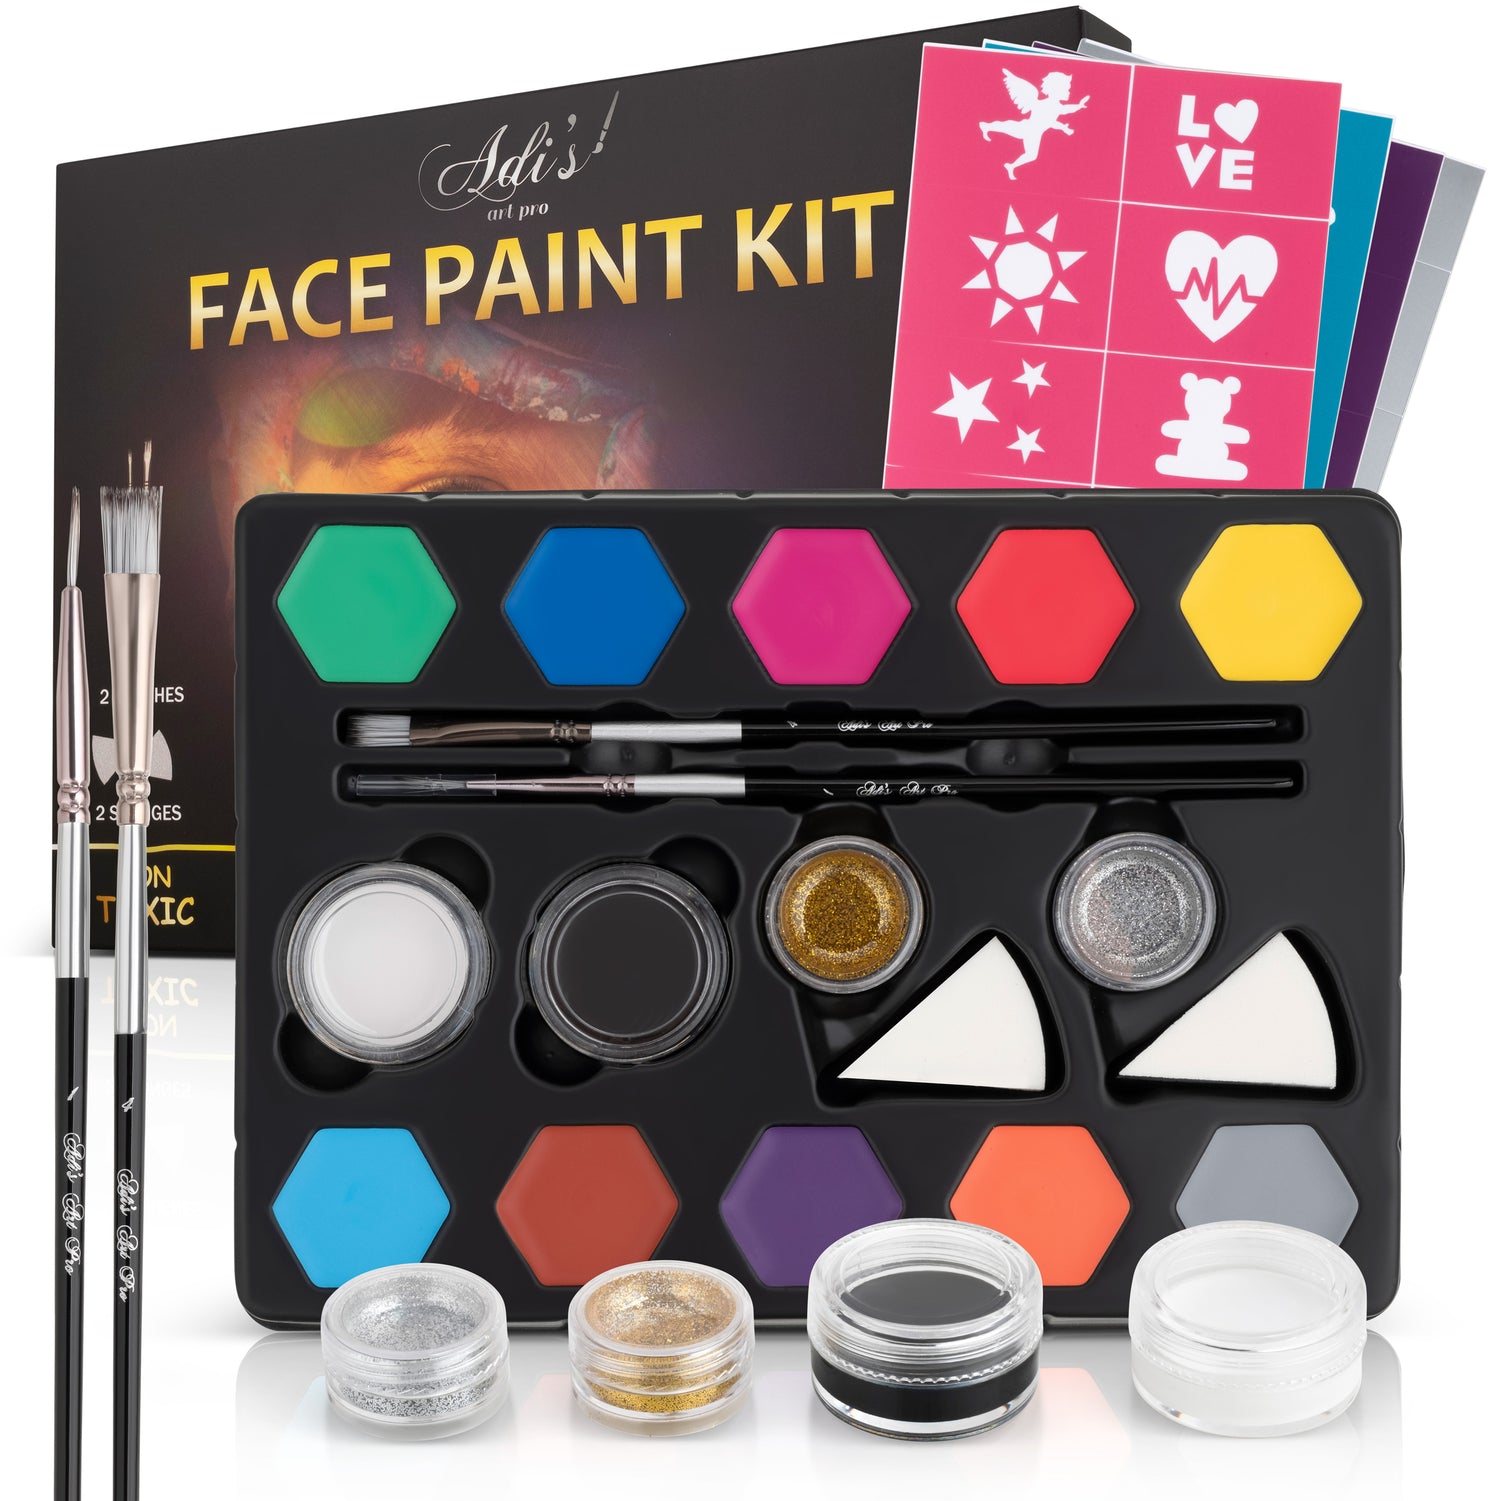 Face Paint Kit for Kids - 58 pcs